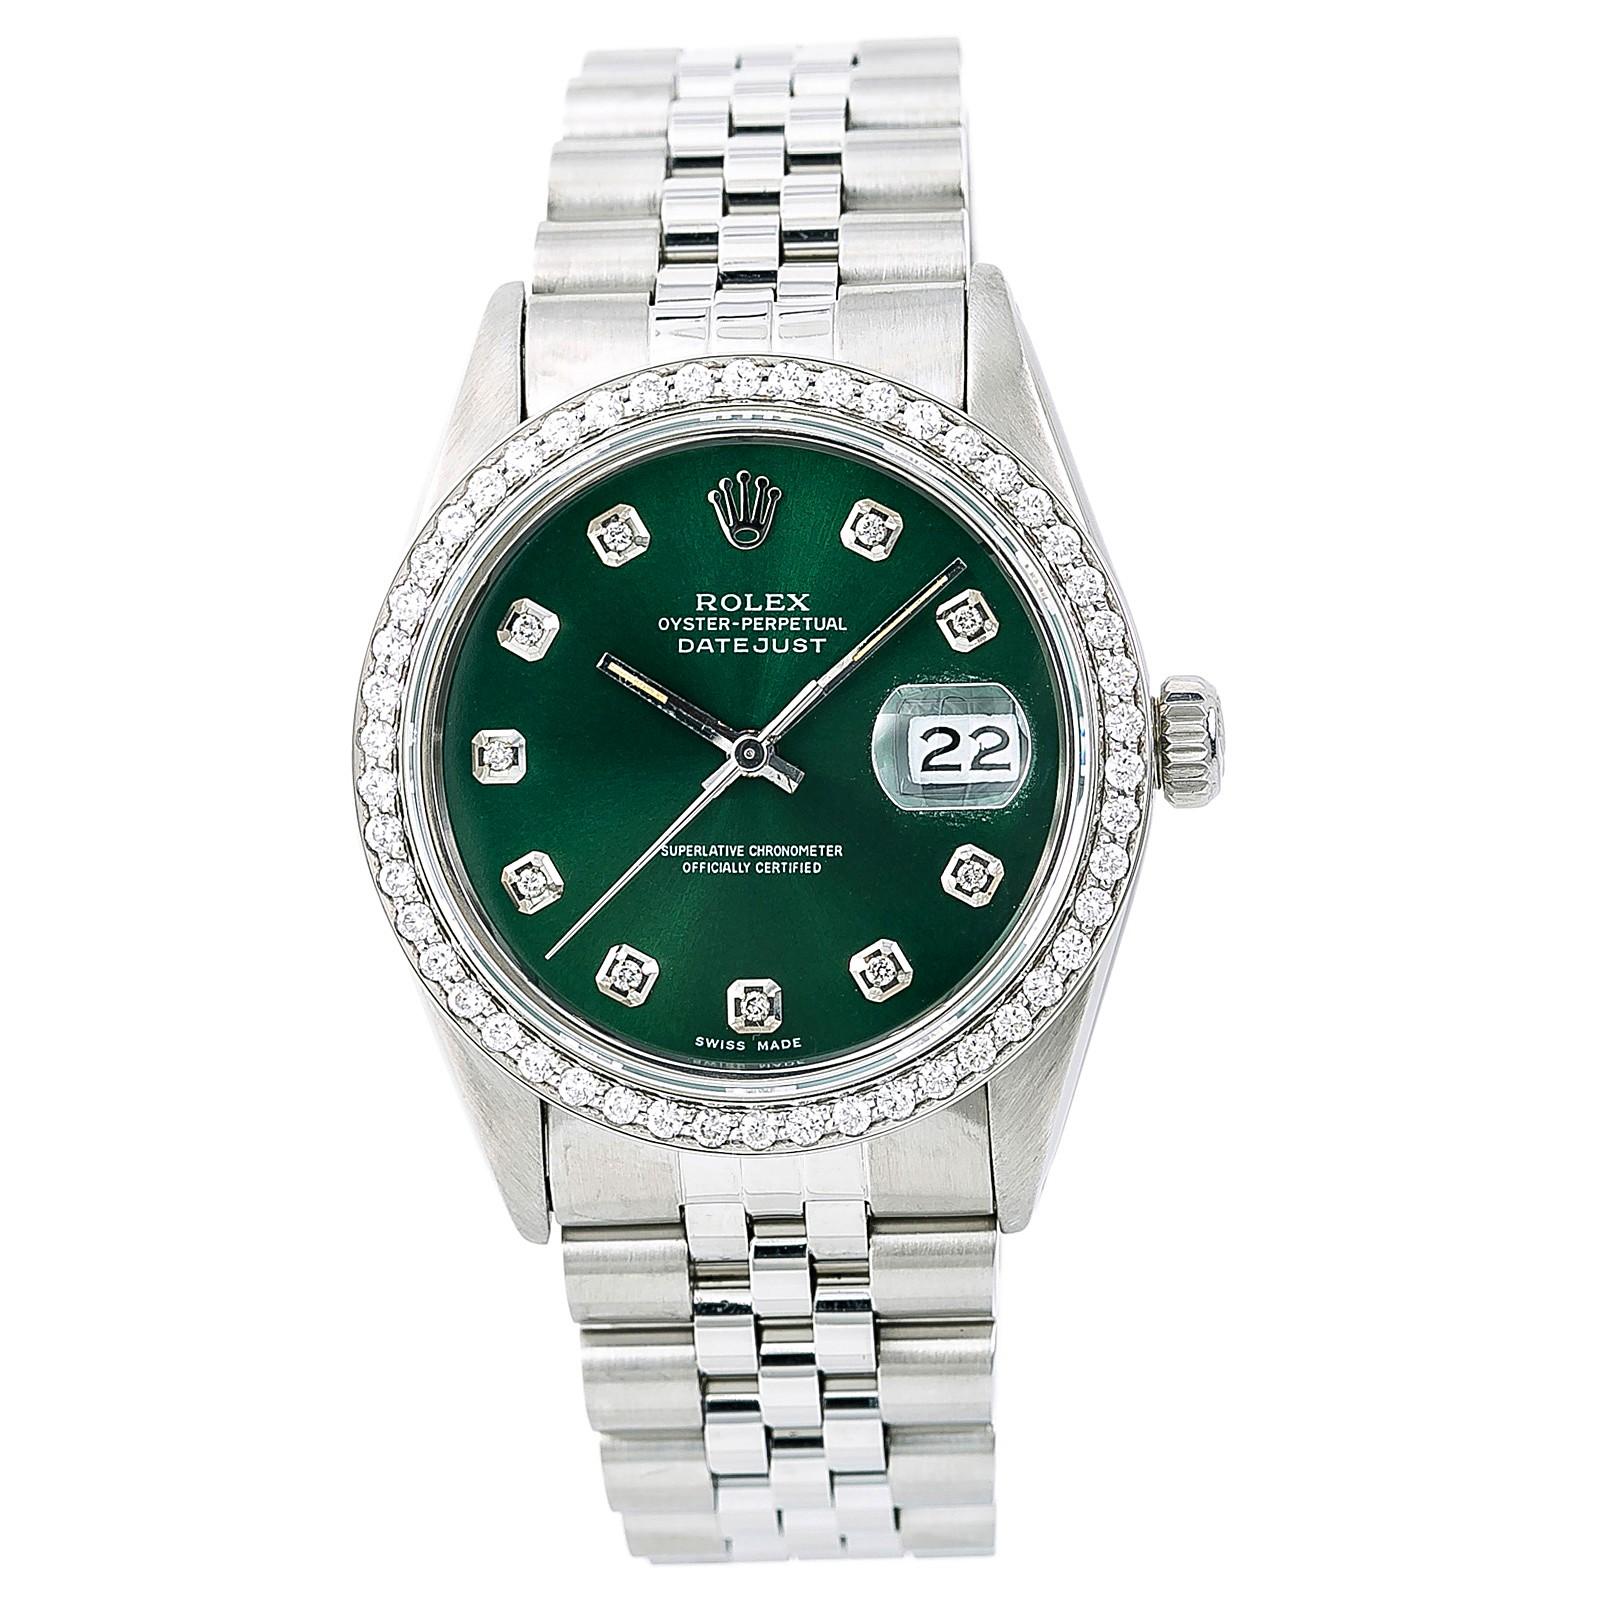 Certified: Rolex Datejust Men's Automatic Watch 1.50CT Diamond Bezel Green Dial